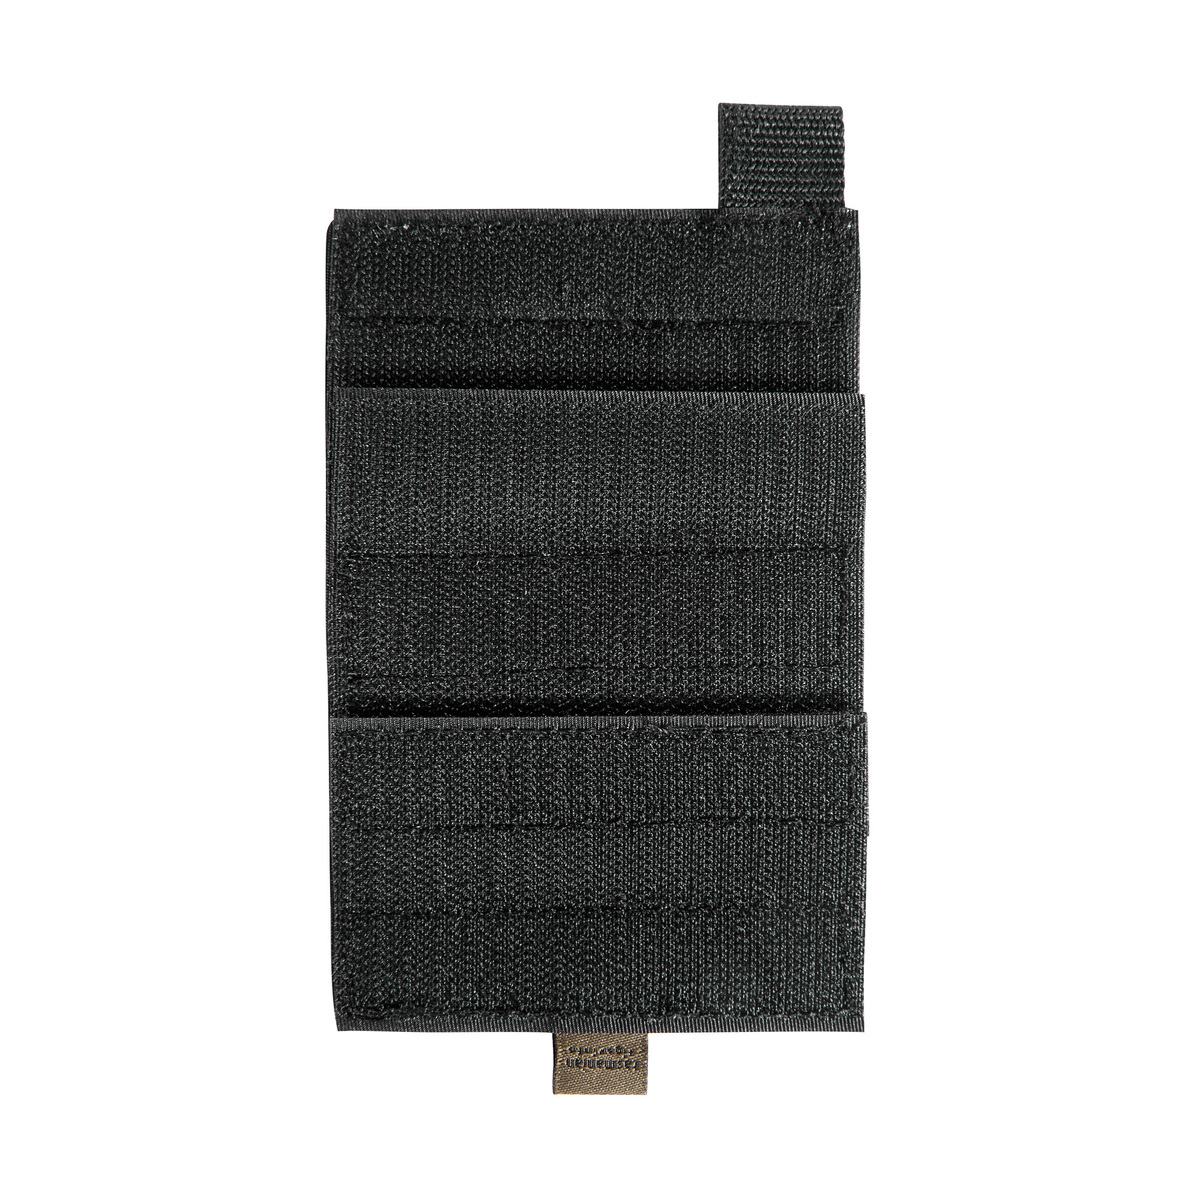 Molle Velcro Adapter Black